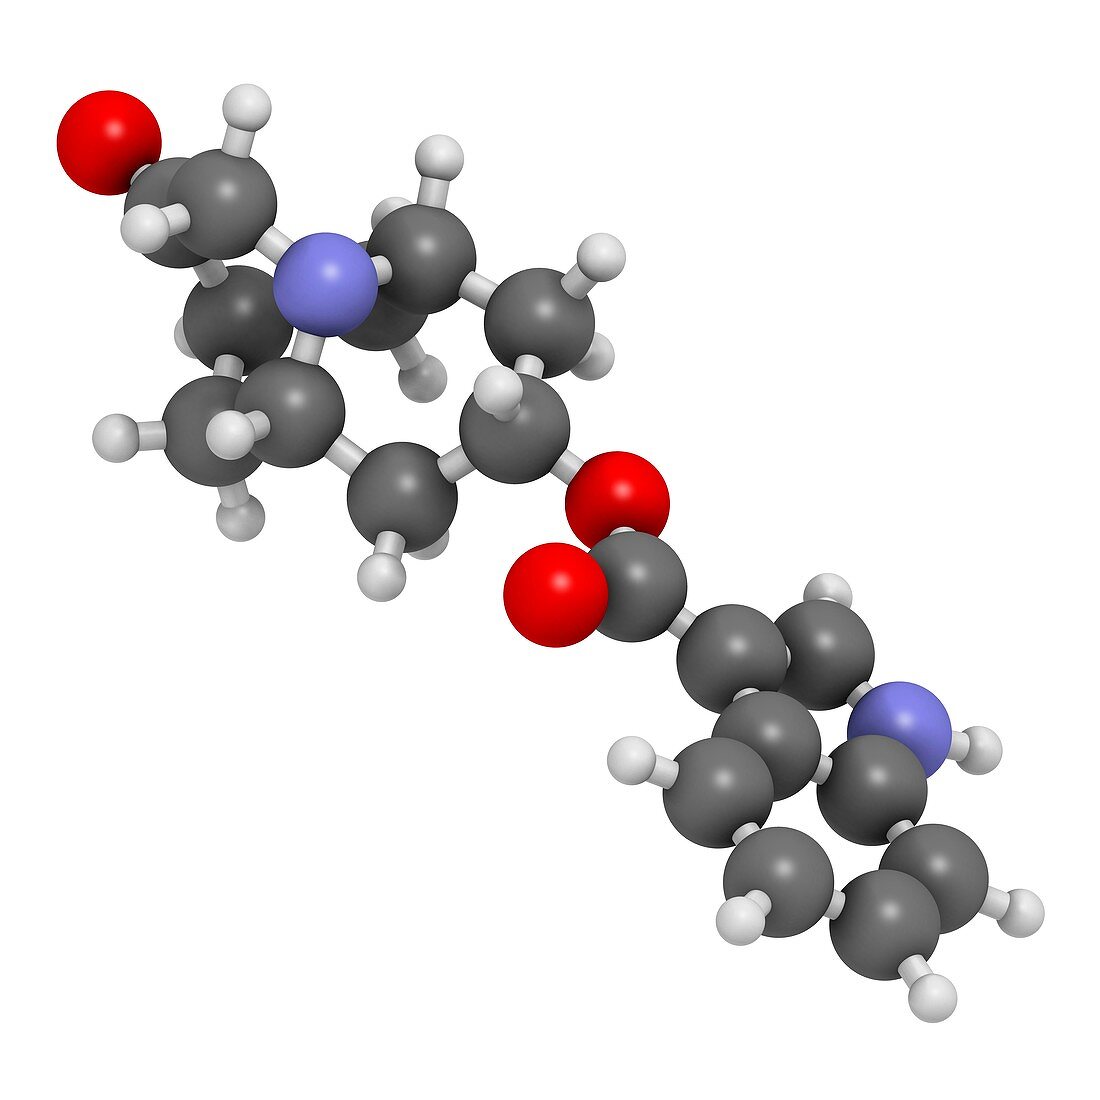 Dolasetron nausea drug molecule